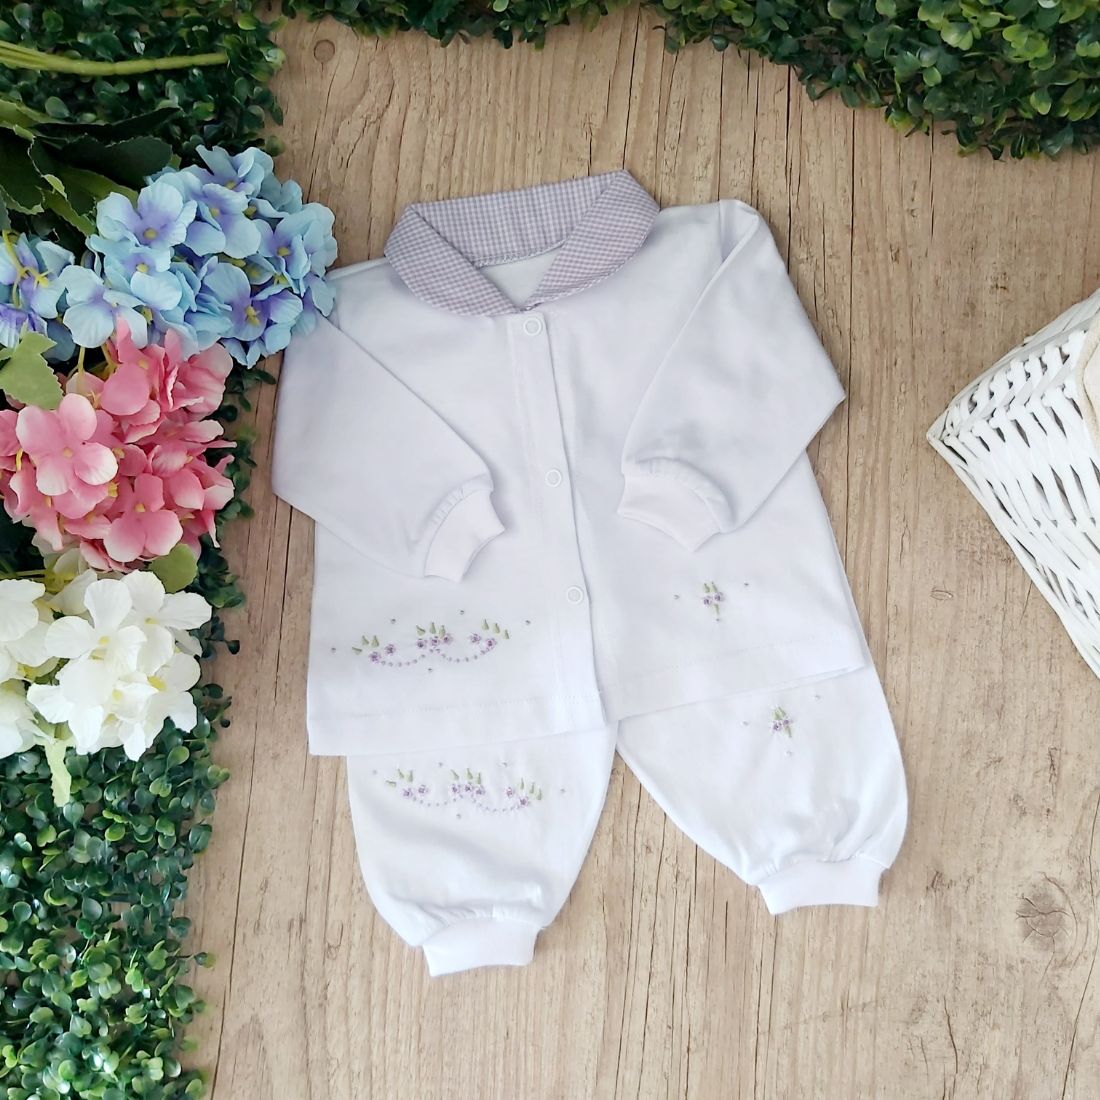 Pijama infantil bordado á mão floral lavanda